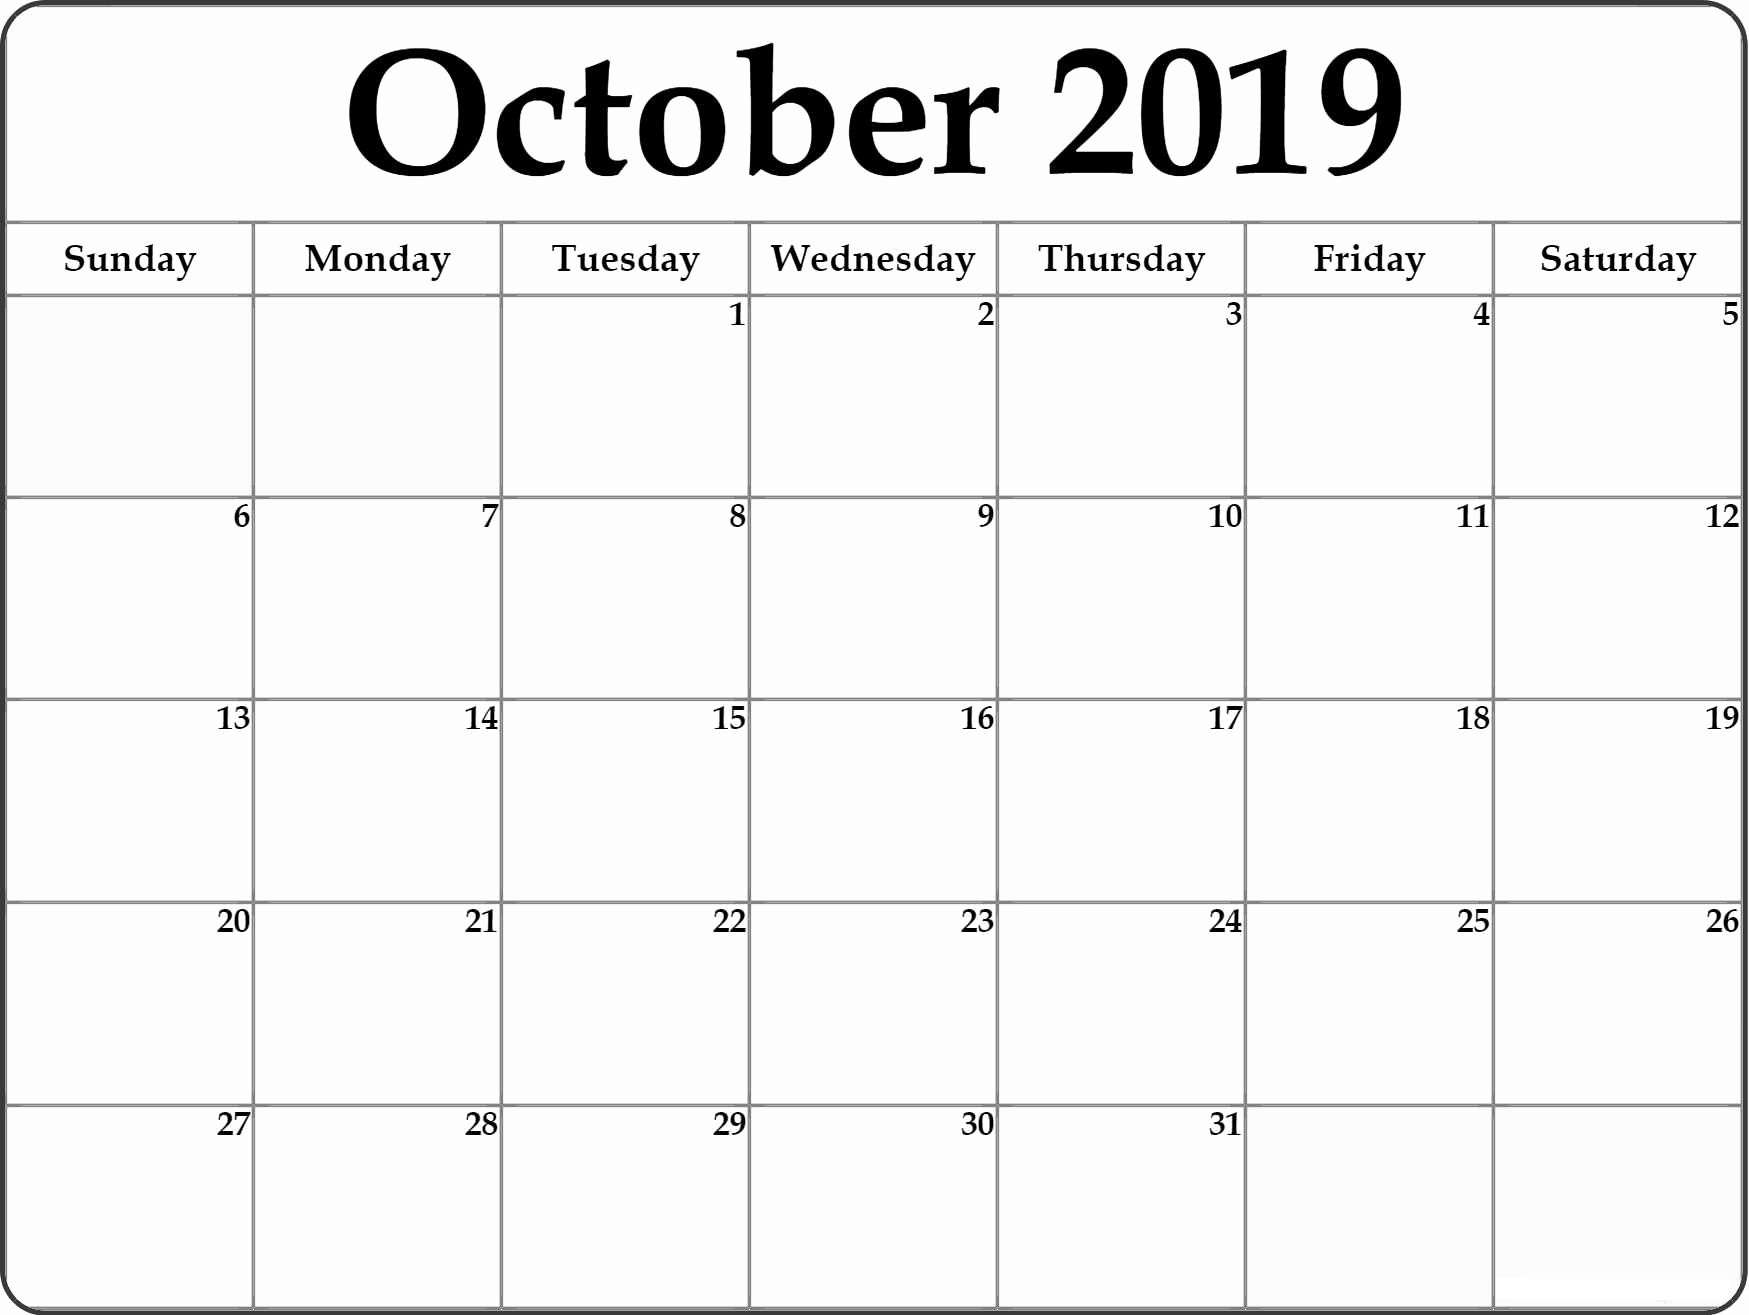 October 2019 Calendar With Holidays Planner - Print Calendar